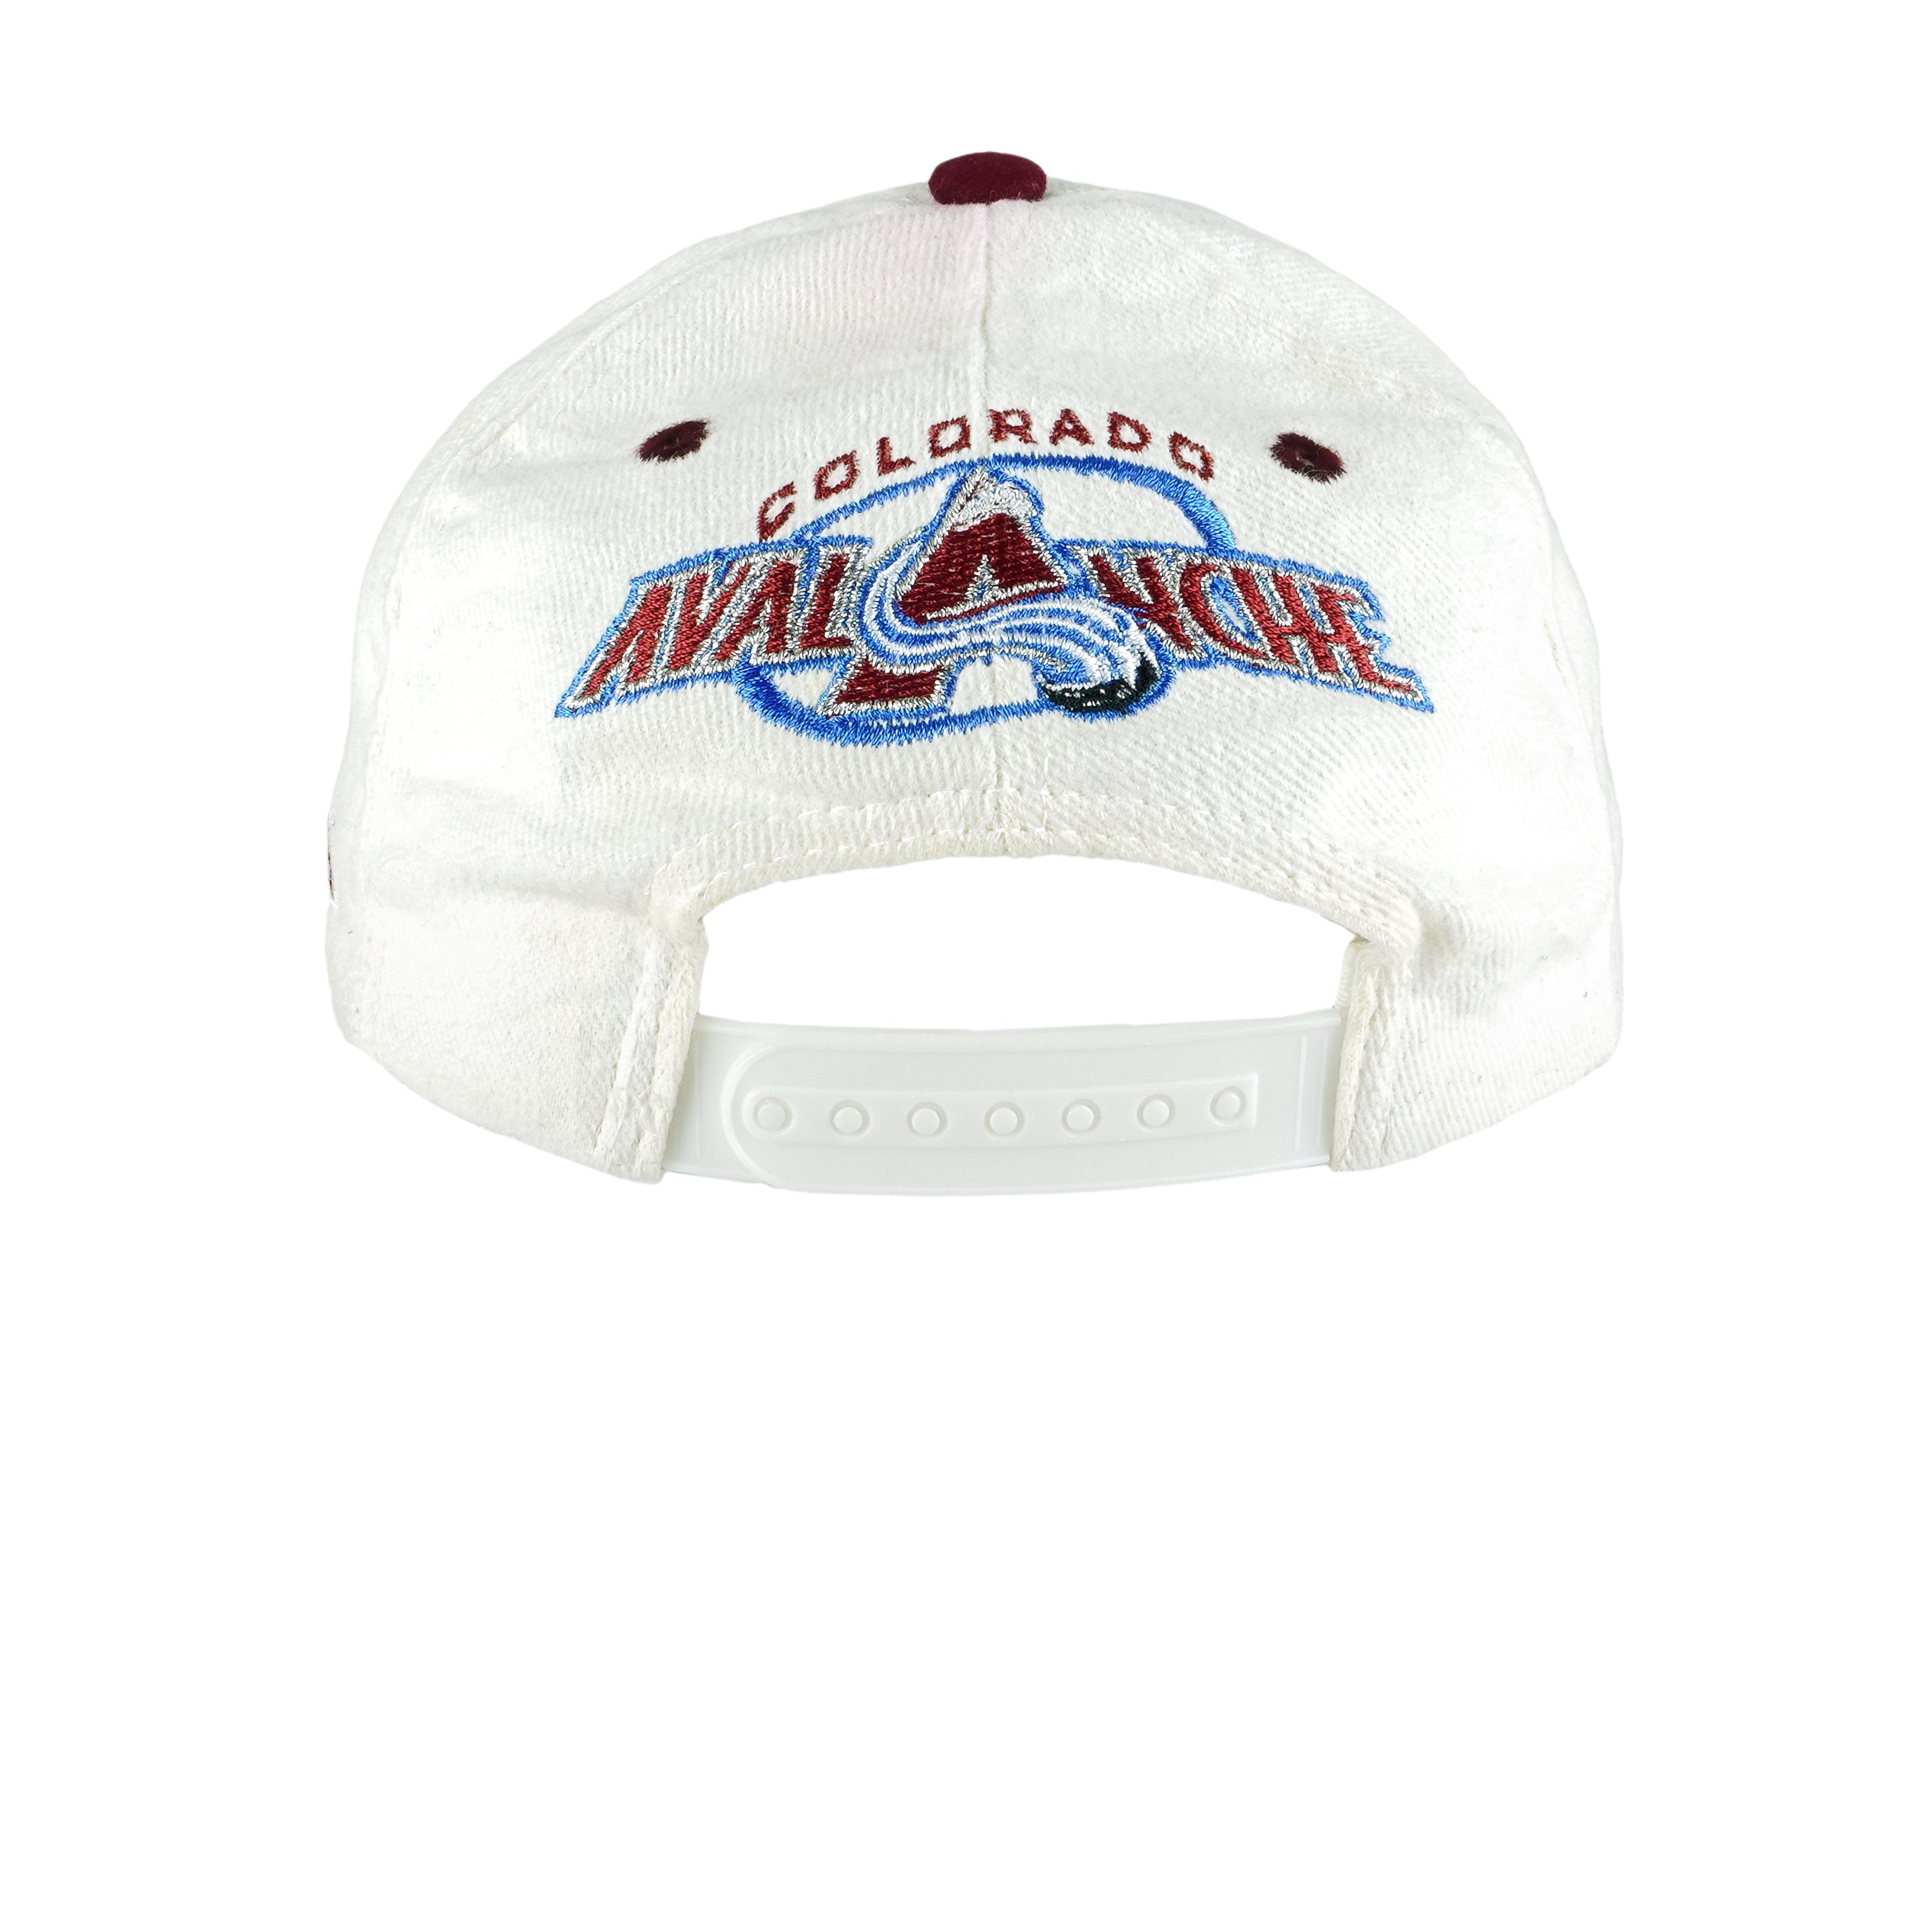 Vintage Colorado Avalanche Clothing, Avalanche Retro Shirts, Vintage Hats &  Apparel